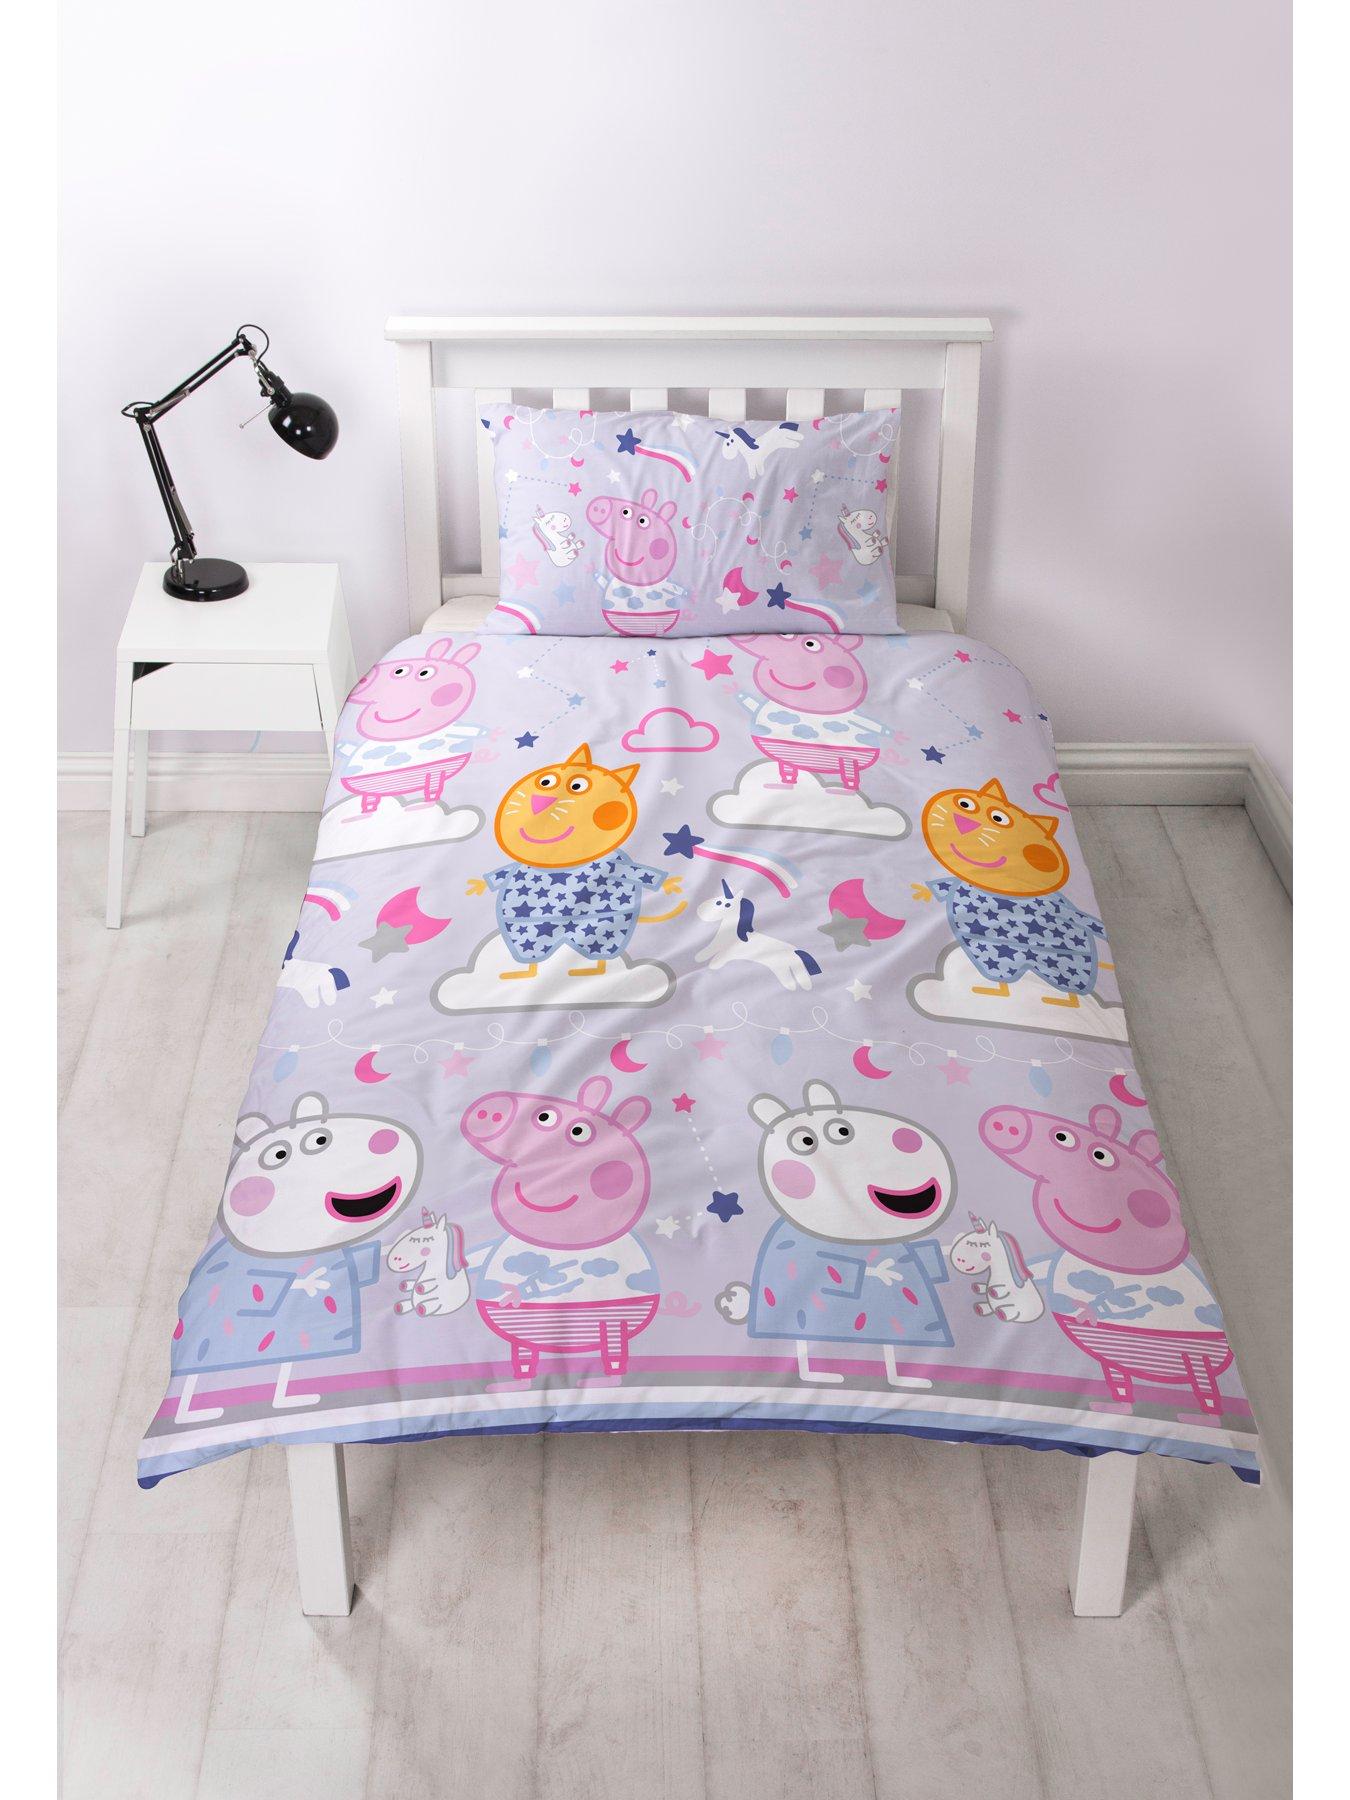 Peppa Pig Kids Bedroom Duvet Covers Bedding Home Garden